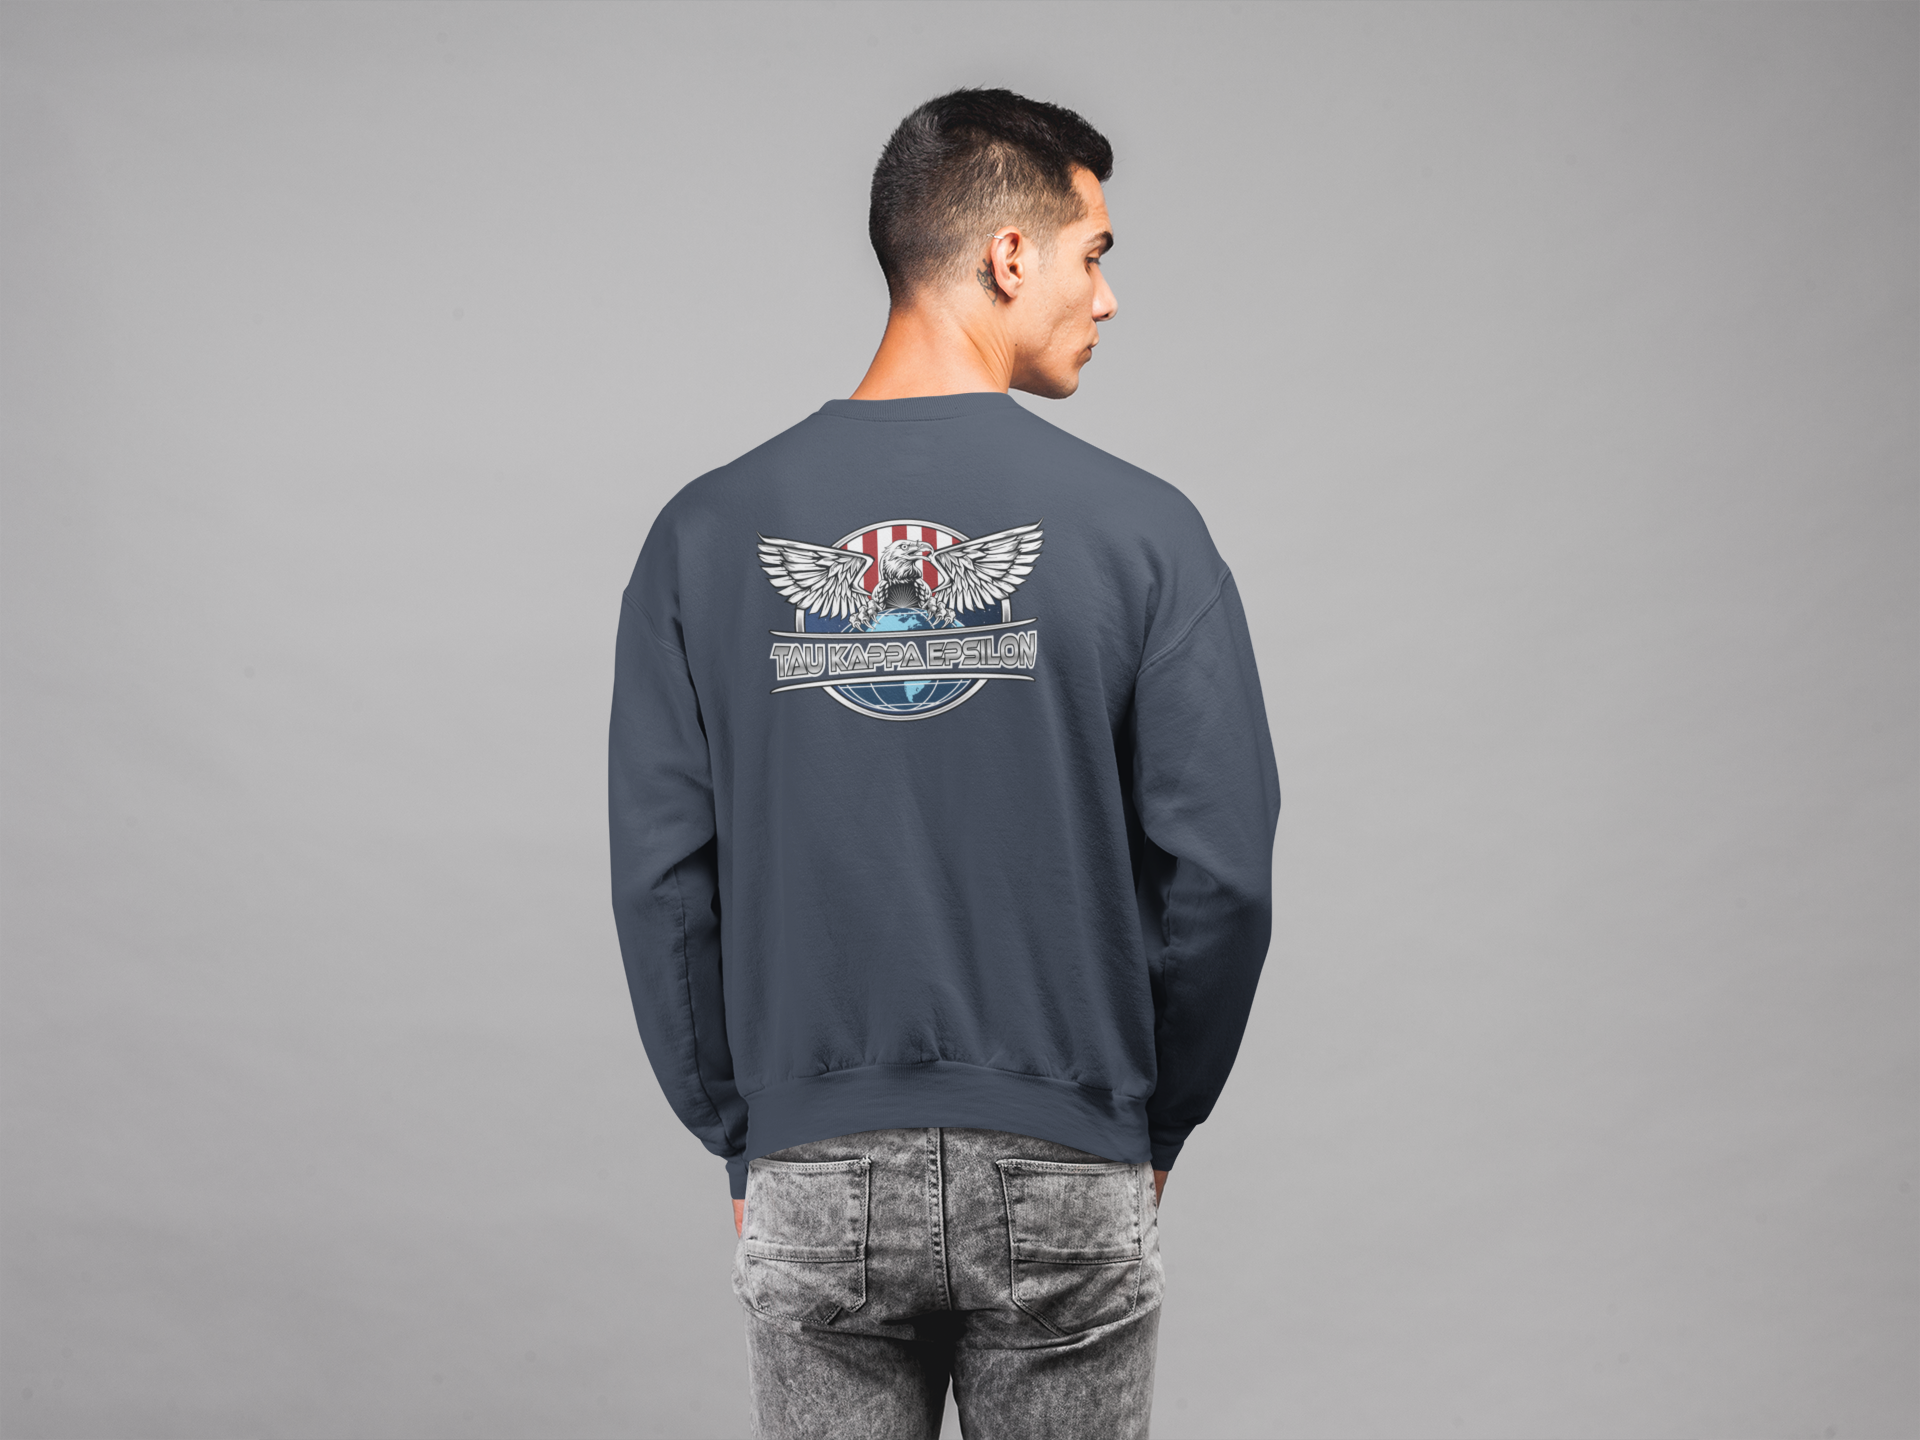 Tau Kappa Epsilon Graphic Crewneck Sweatshirt | The Fraternal Order | Tau Kappa Epsilon Fraternity model 